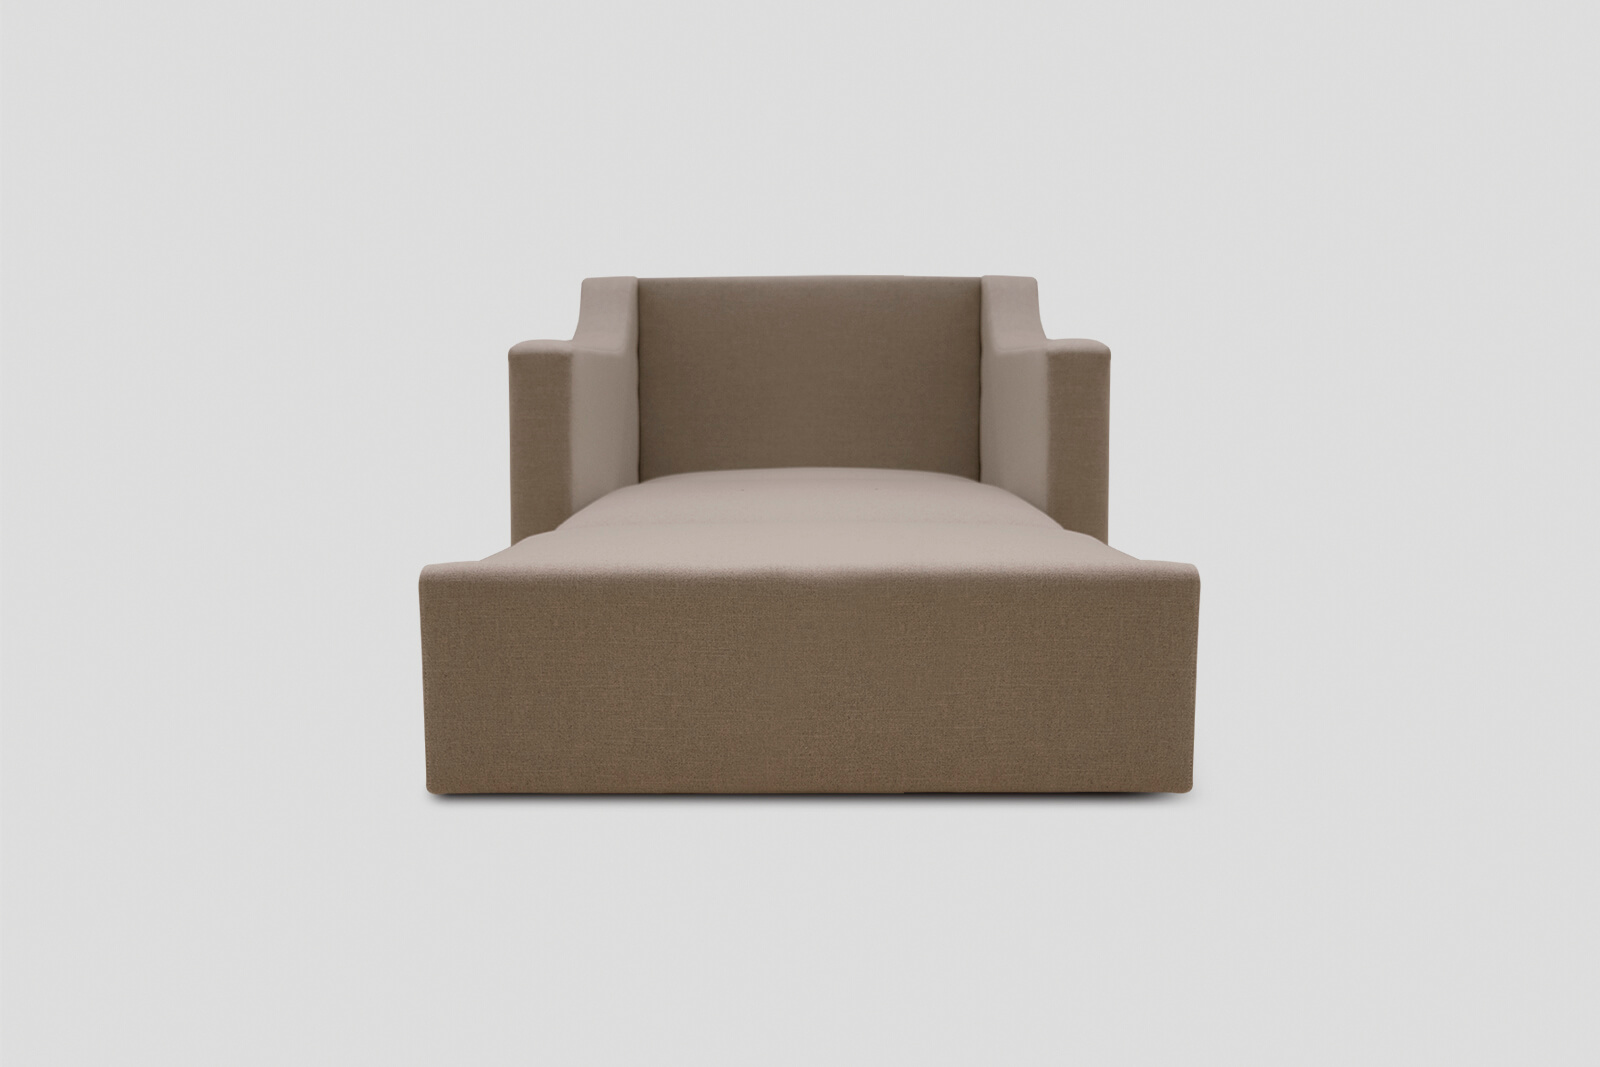 HBSB02-single-sofa-bed-husk-bed-front